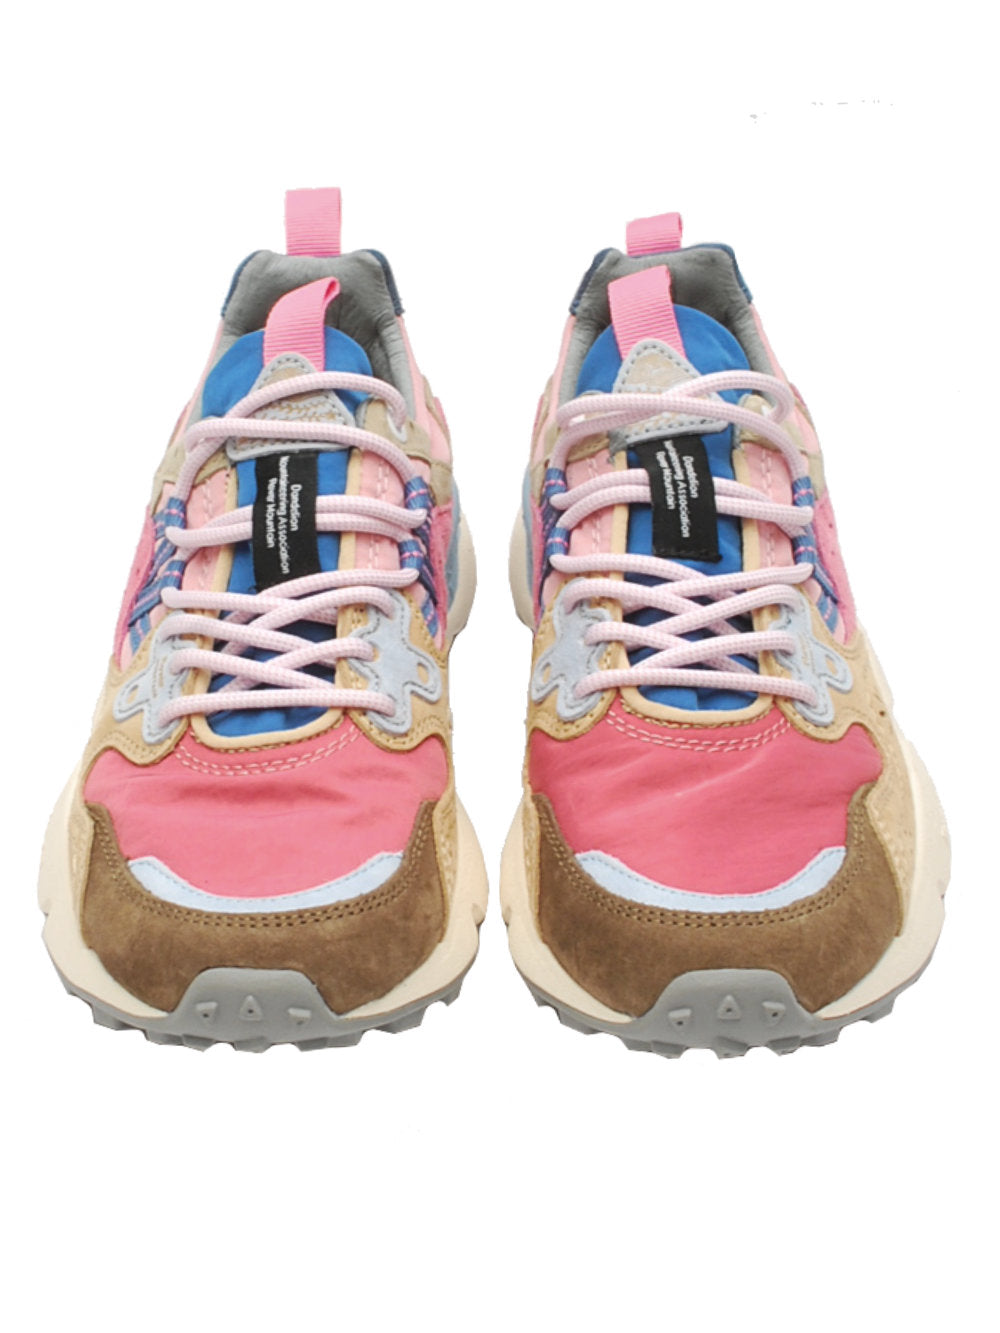 Flower mountain sneaker yamano 3 1m17 pink-multi pe24